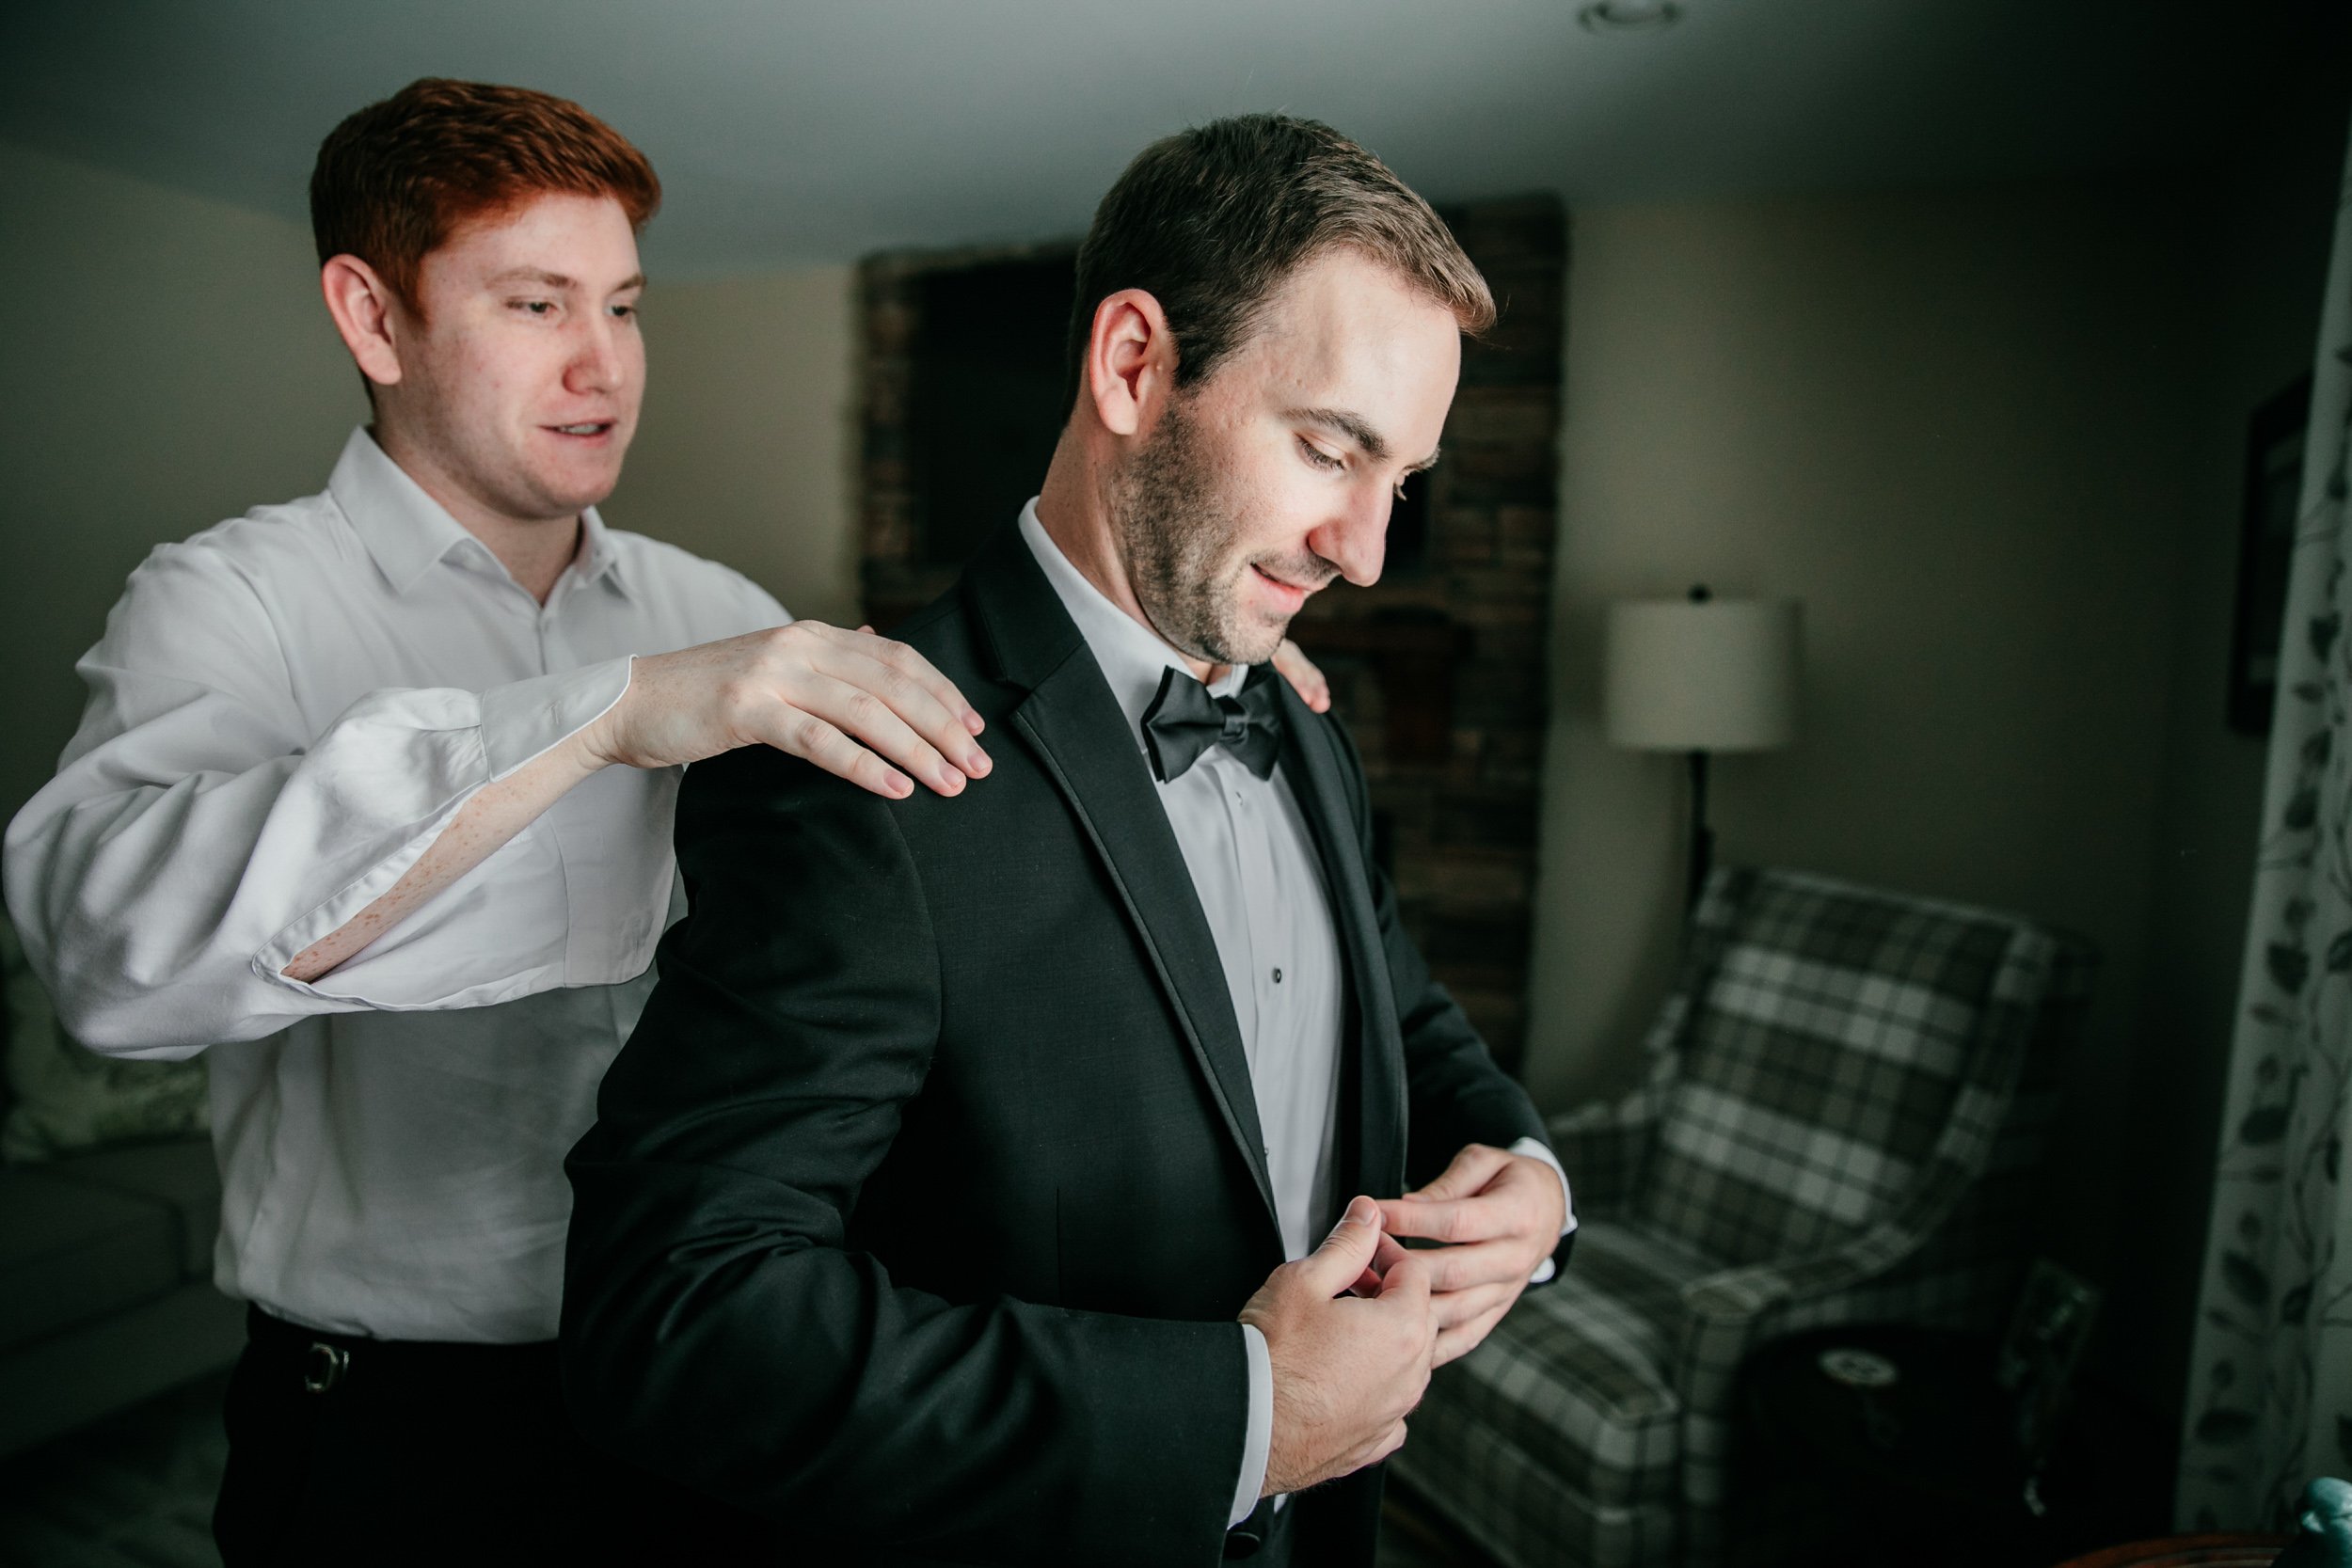 LUCEINS MANOR WEDDING PHOTOGRAPHY - FEB 2021 - 11.jpg